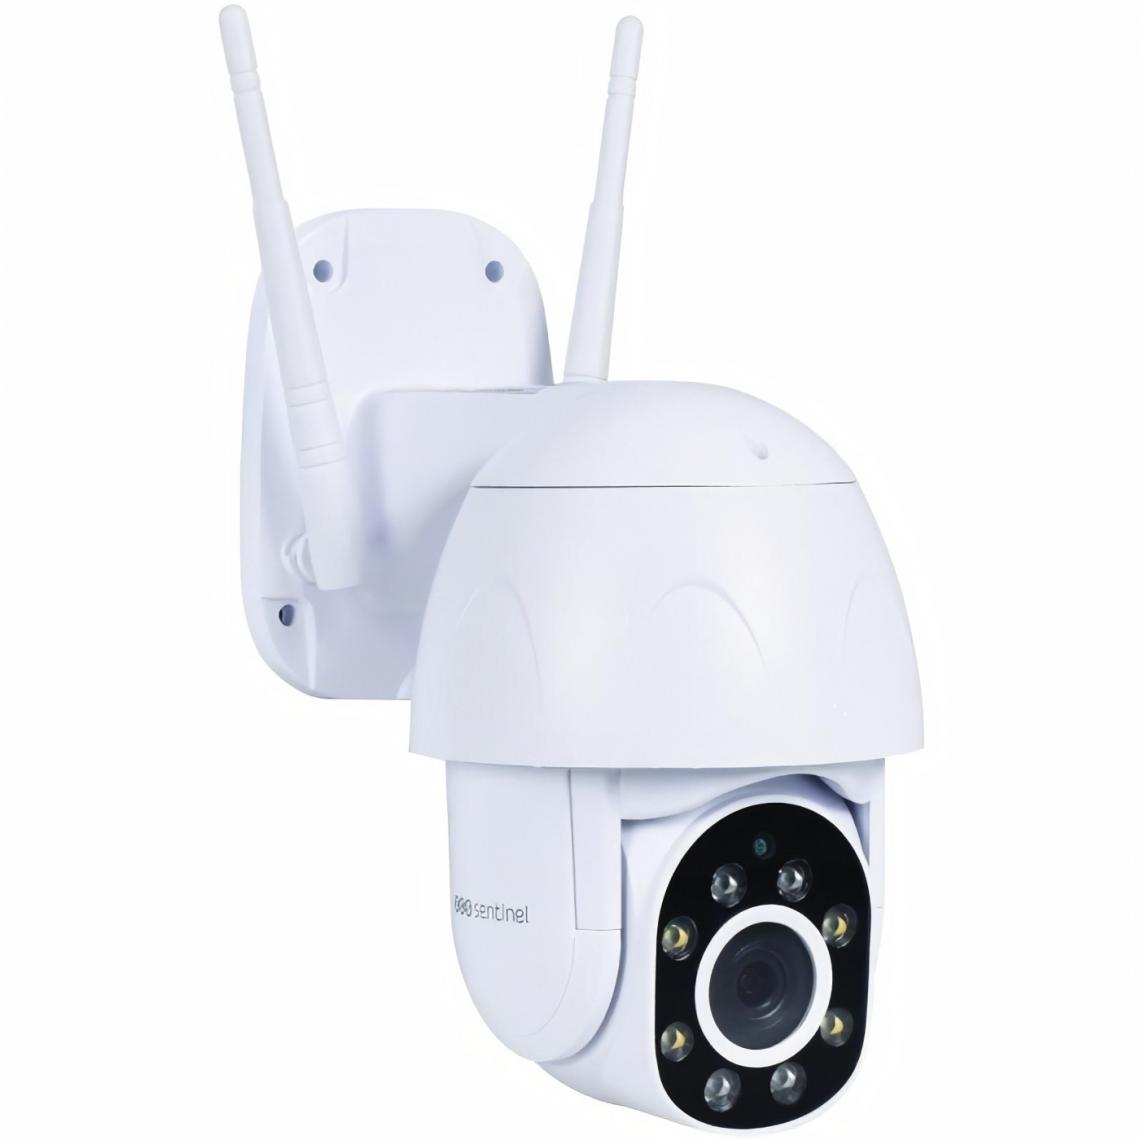 Scs Sentinel - SCS SENTINEL Caméra de surveillance extérieure rotative Full HD - OutCam Rotative - Caméra de surveillance connectée